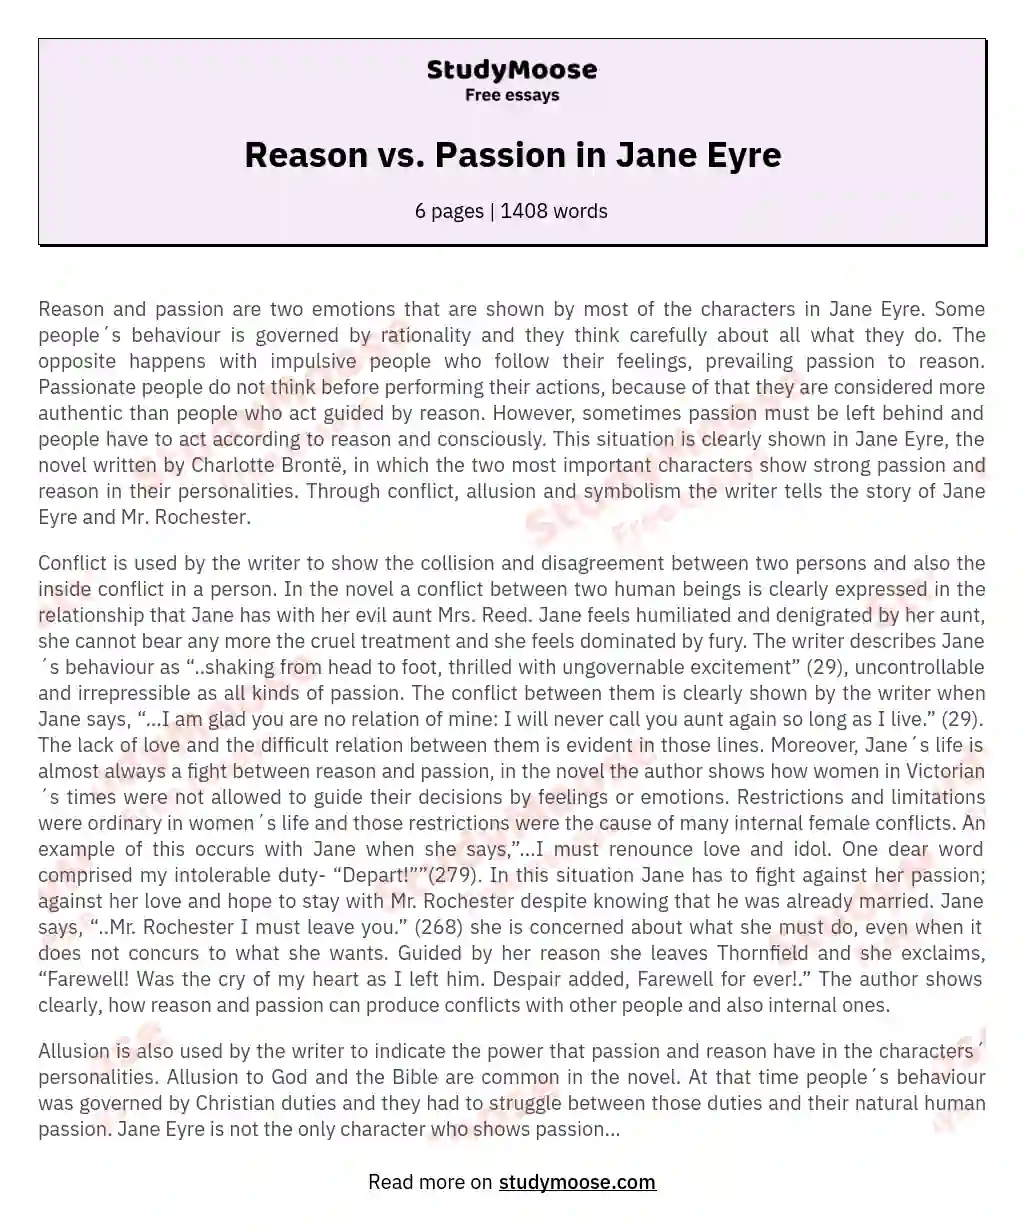 Reason vs. Passion in Jane Eyre